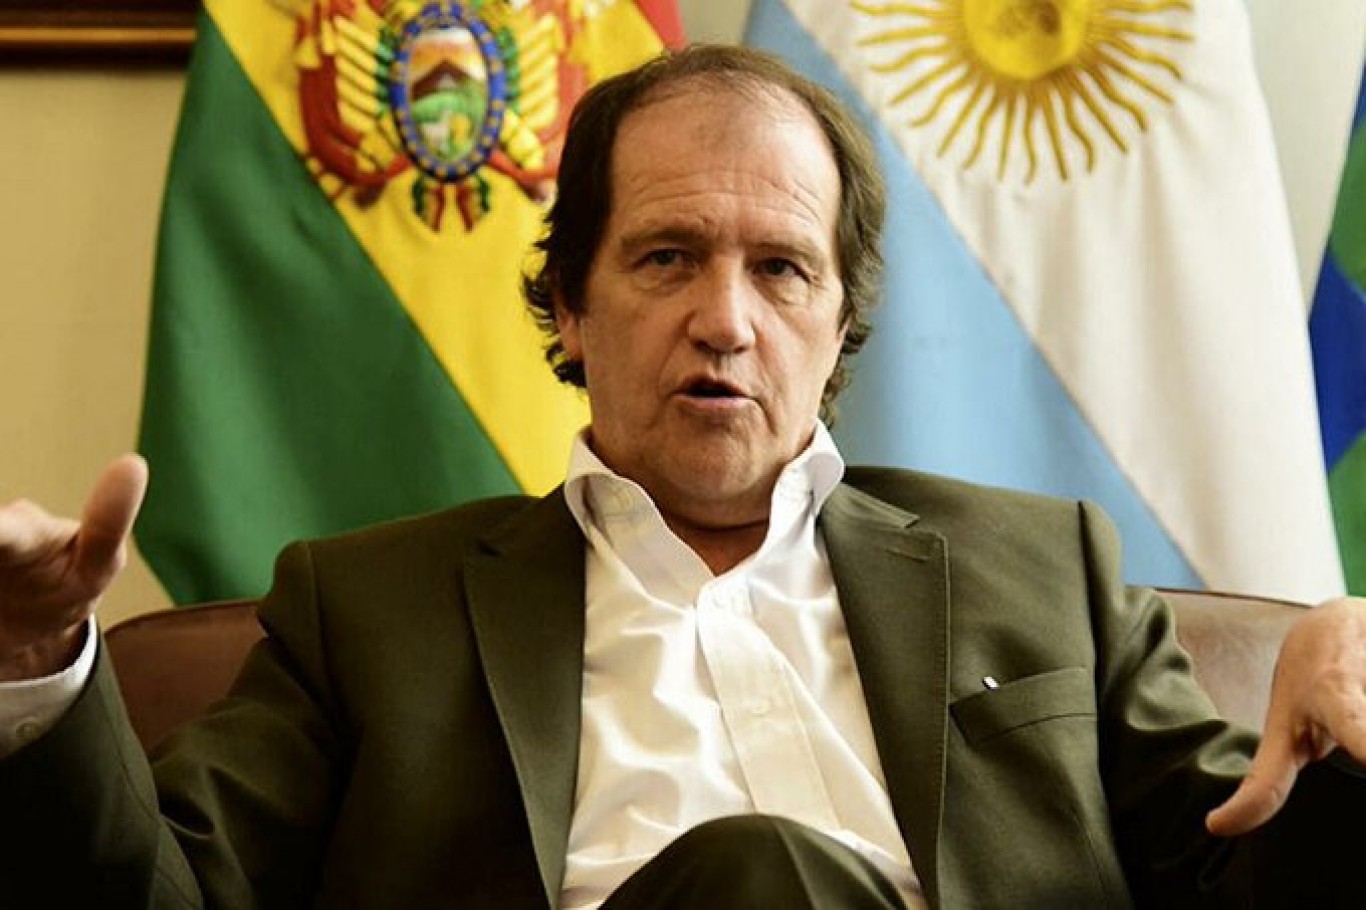 "Quieren tratar de juzgar a Cristina Fernández de Kirchner, sin ninguna prueba completa o específica"